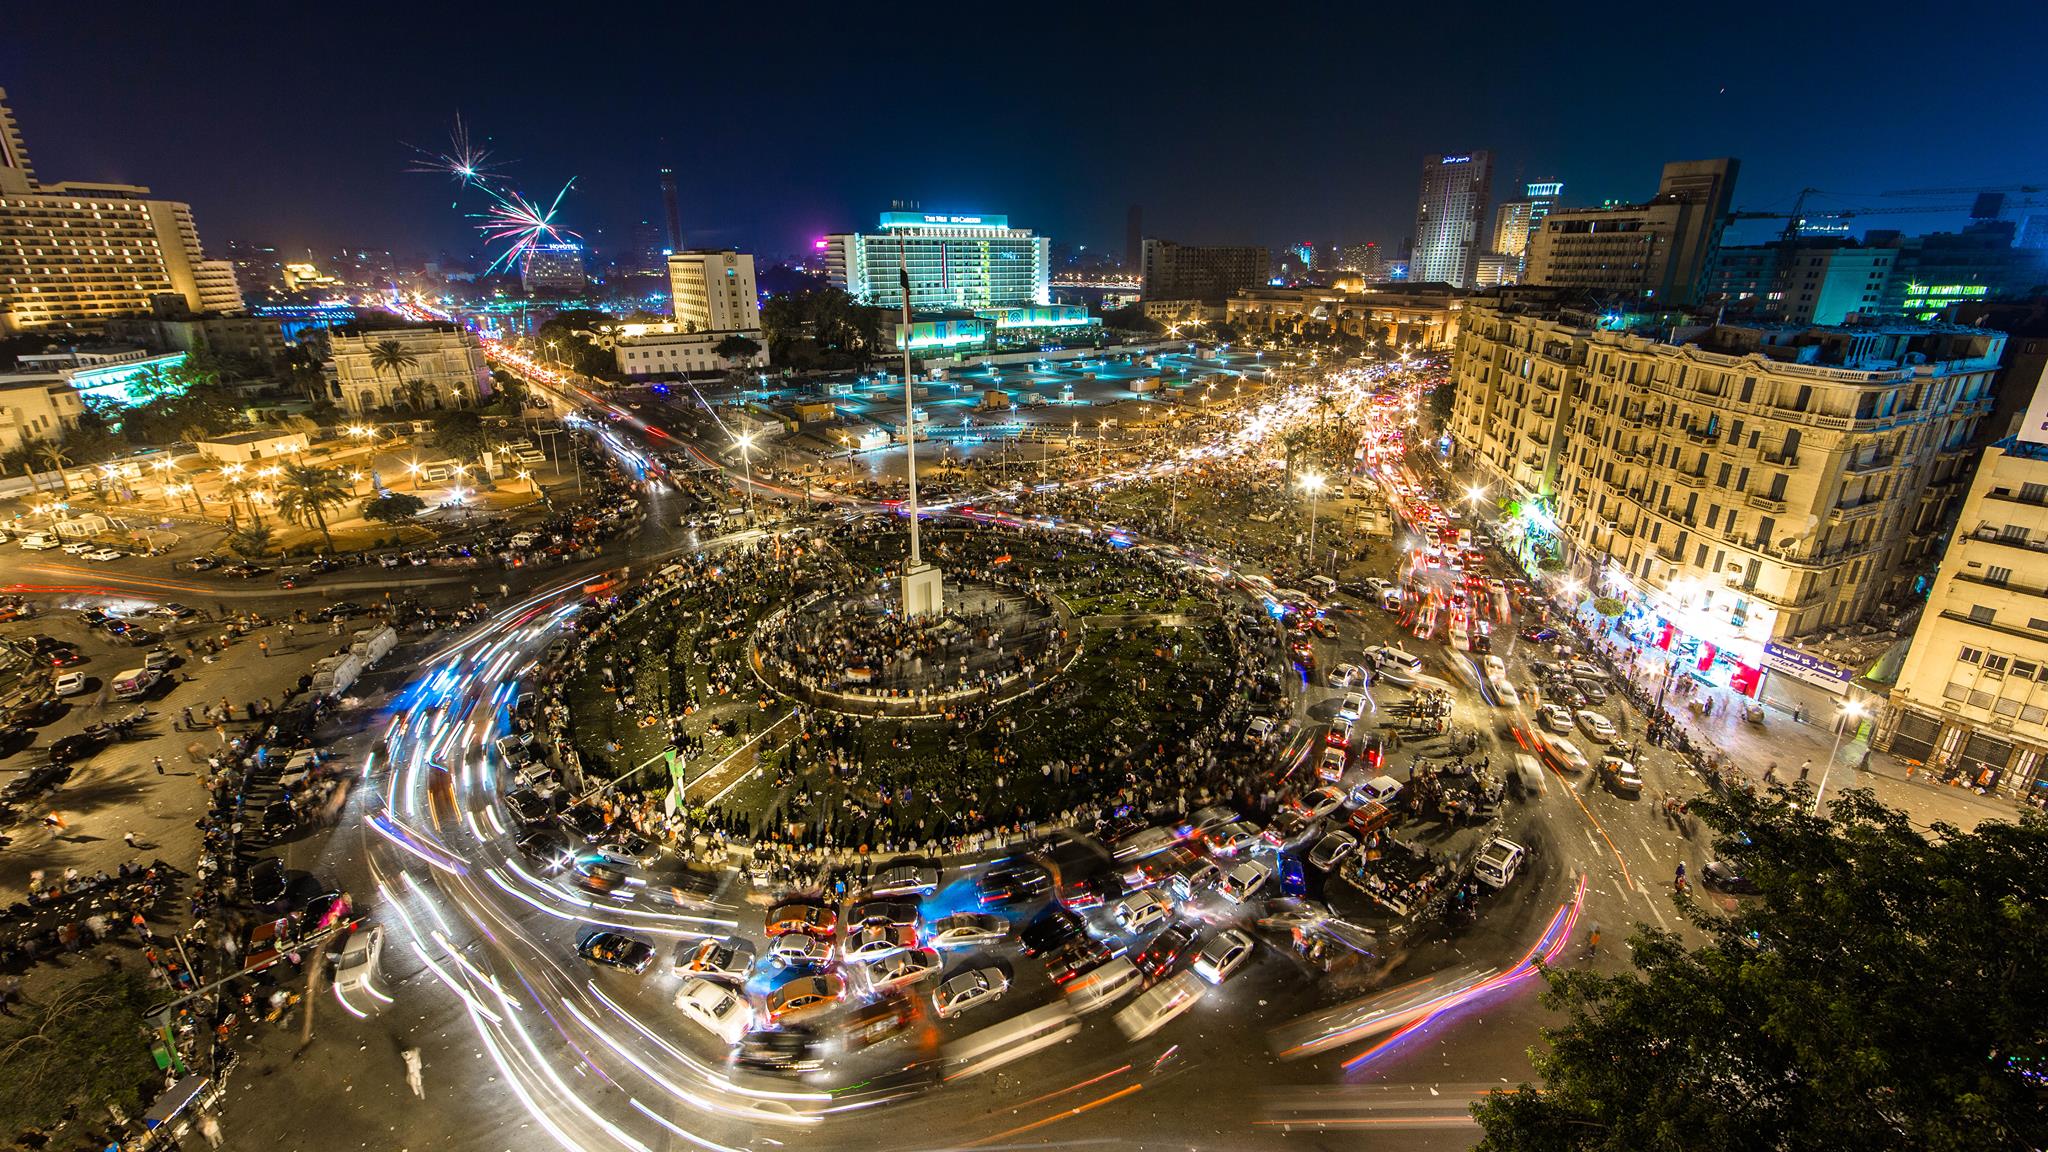 Tahrir Square in 2015. Credit: Hisham Moll